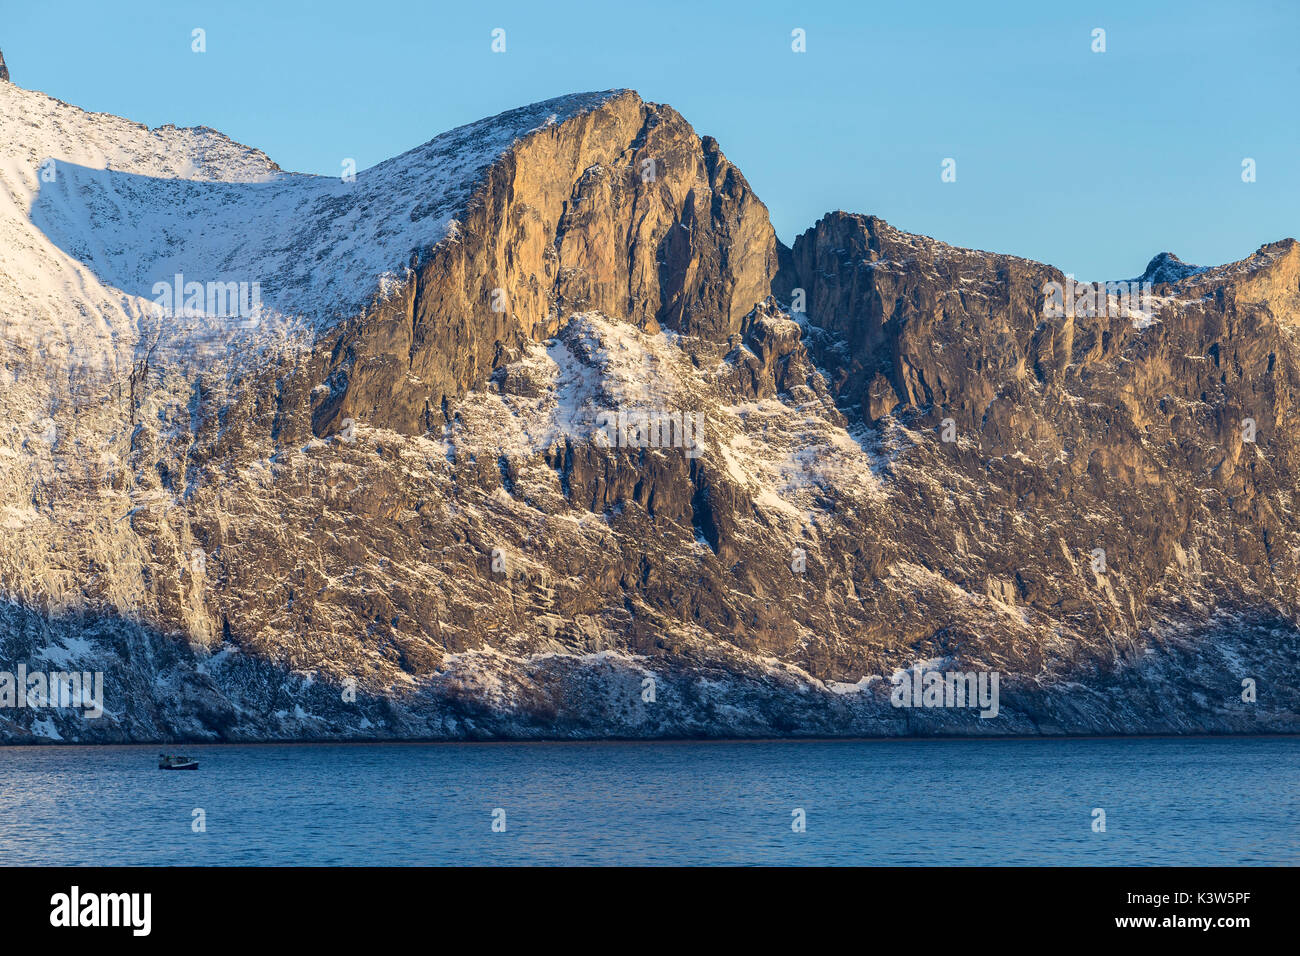 Angeln Boot segelt in Mefjorden mit imposanten Felswände dahinter. Mefjordvaer, Mefjorden, Senja, Norwegen, Europa. Stockfoto